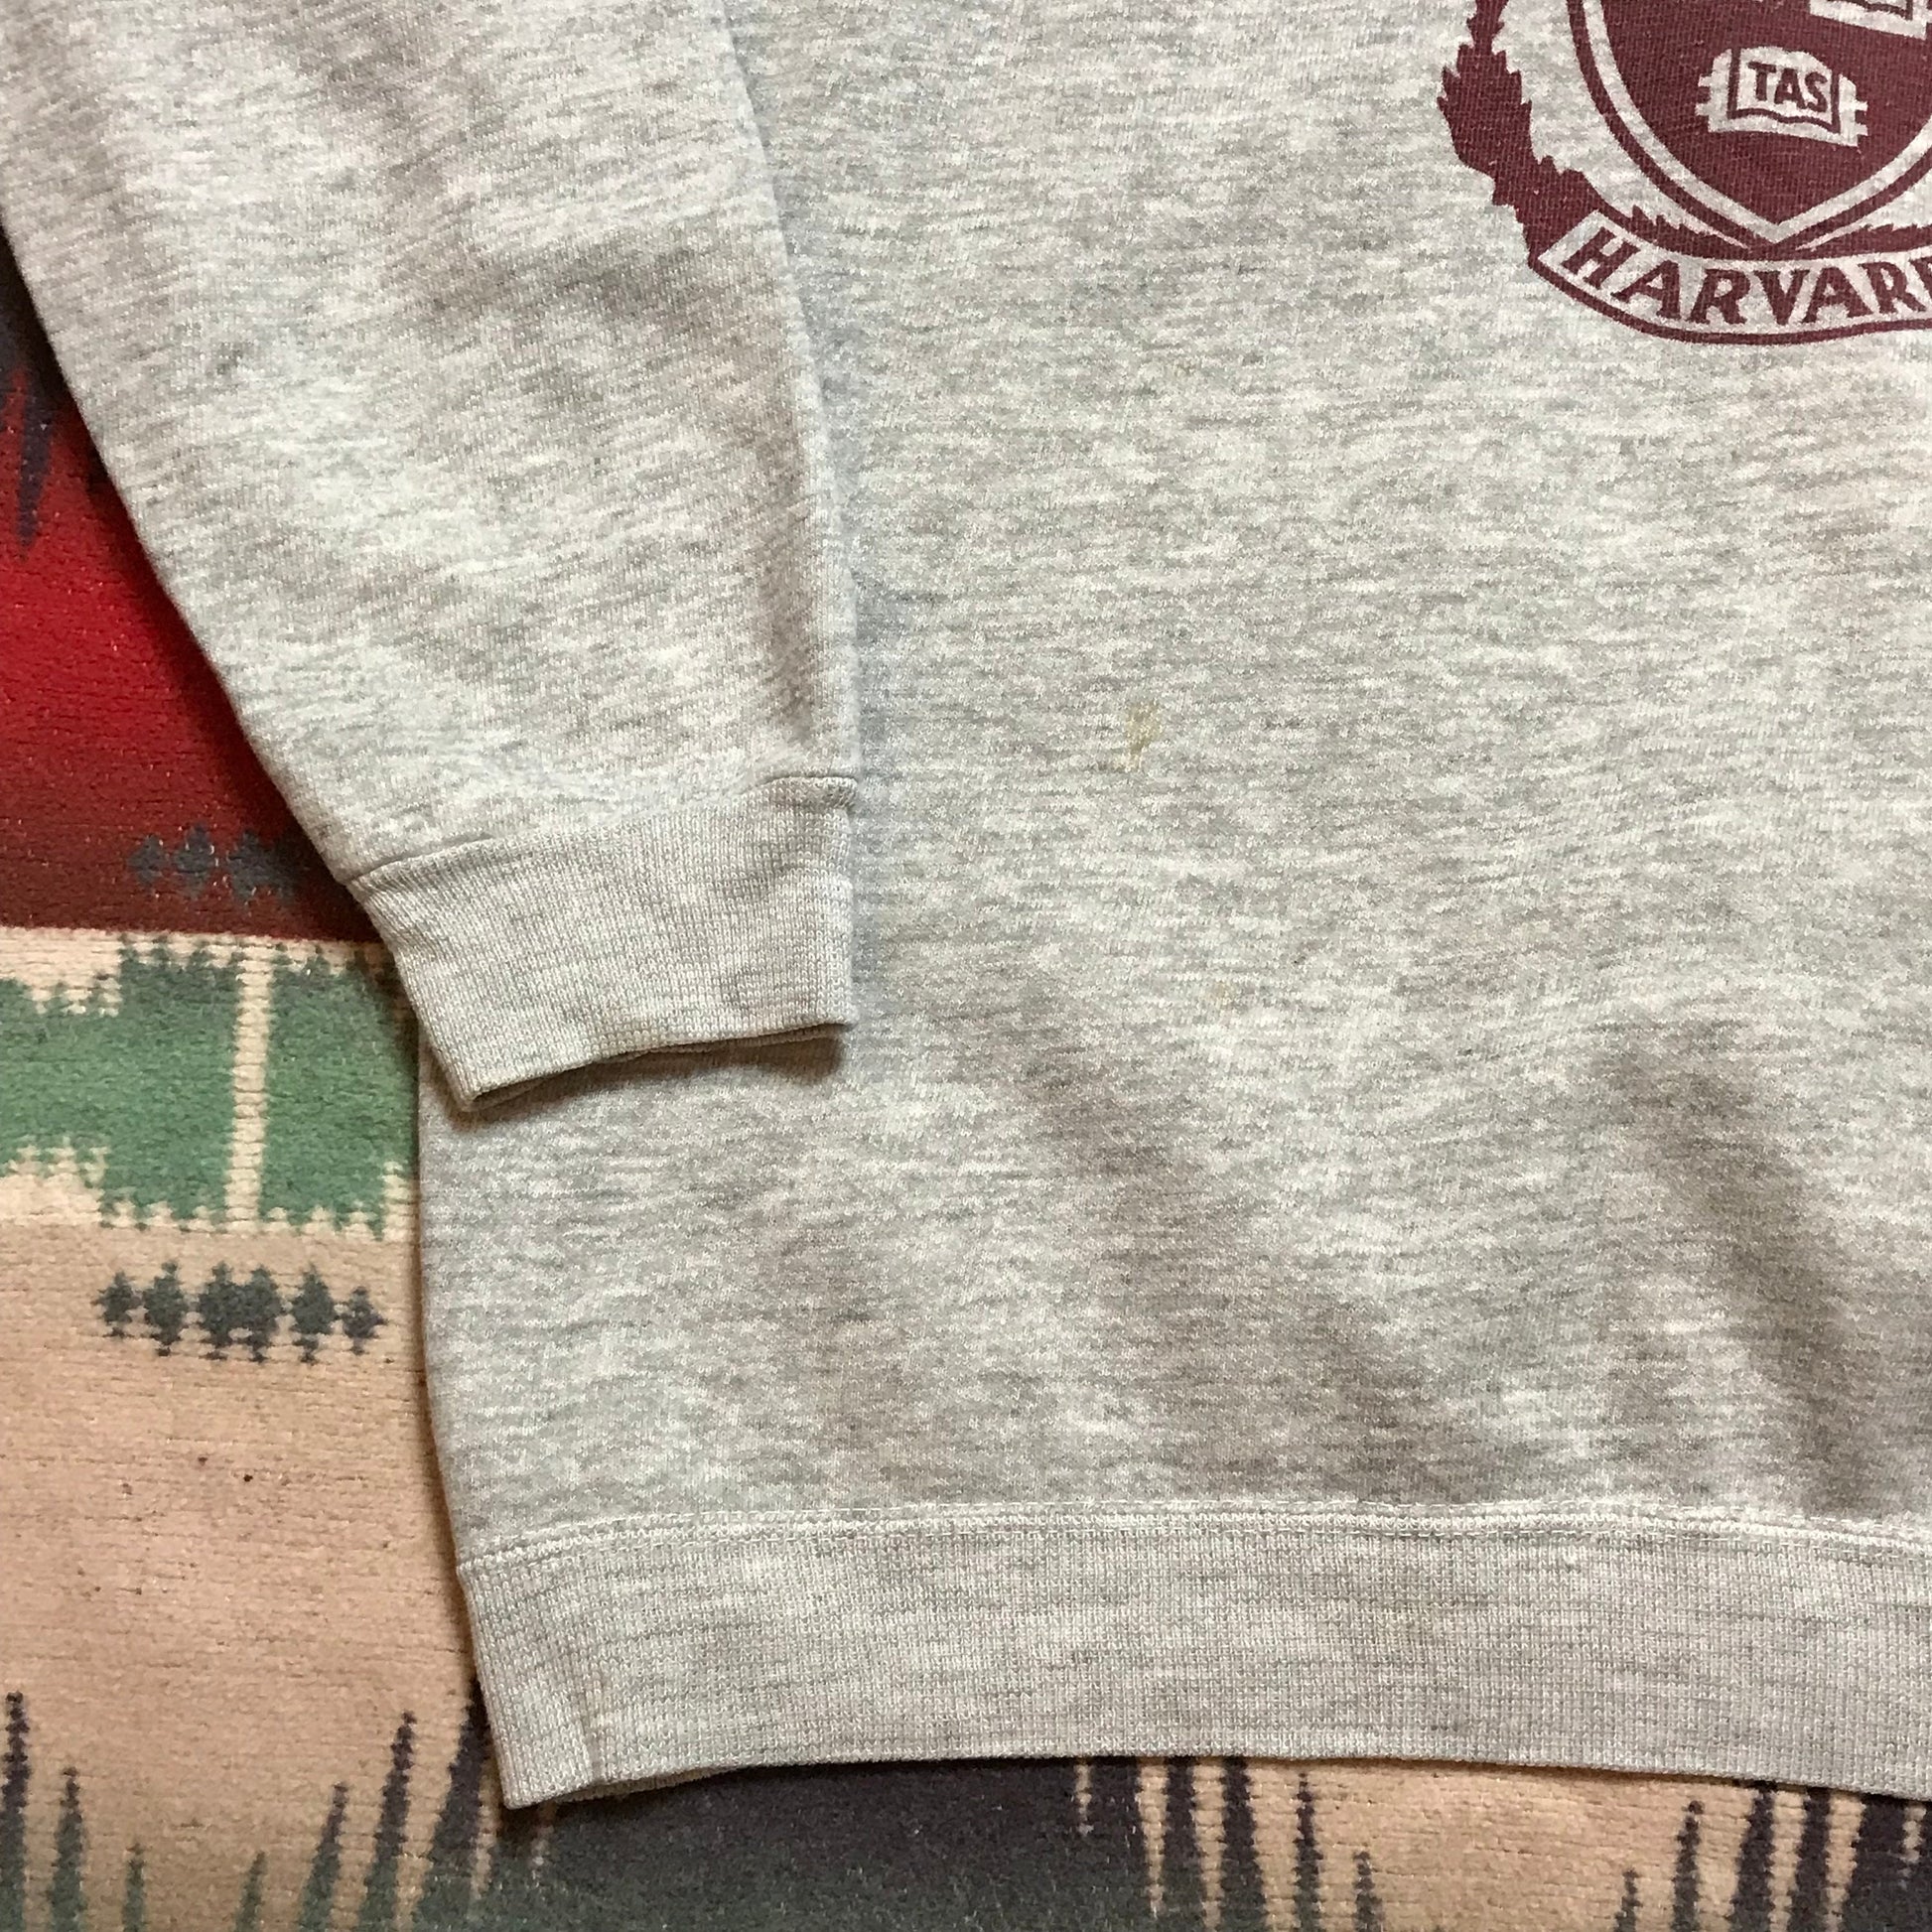 1970s Harvard University Raglan Sweatshirt Size S/M